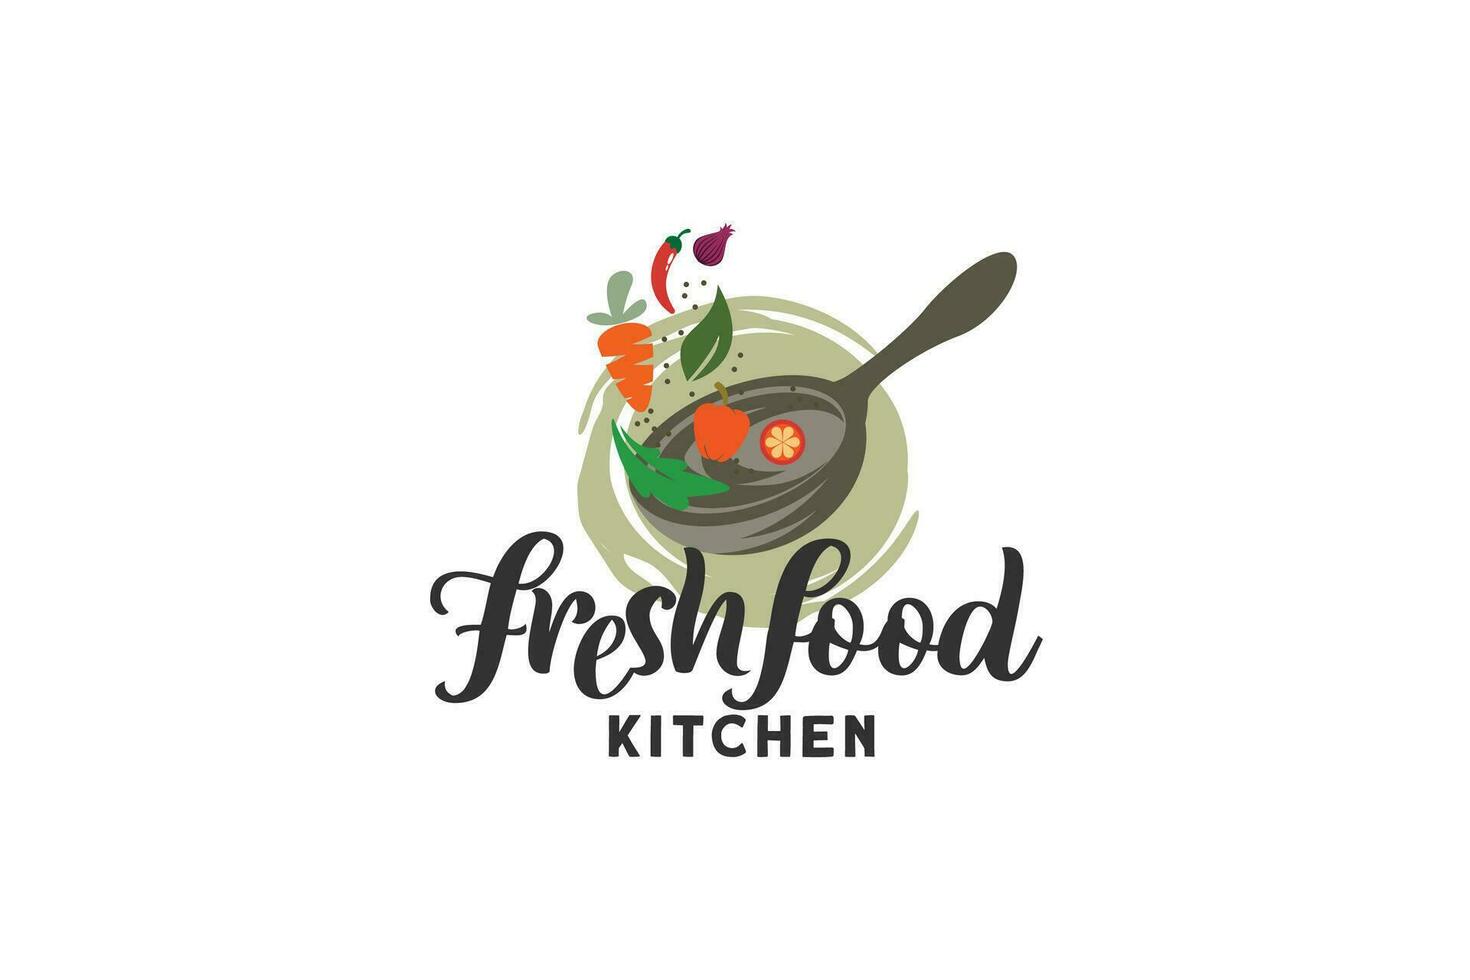 Fresco comida cocina logo con un combinación de un fritura pan o wok y vegetales. genial para restaurante, cafetería, comercio, etc. vector